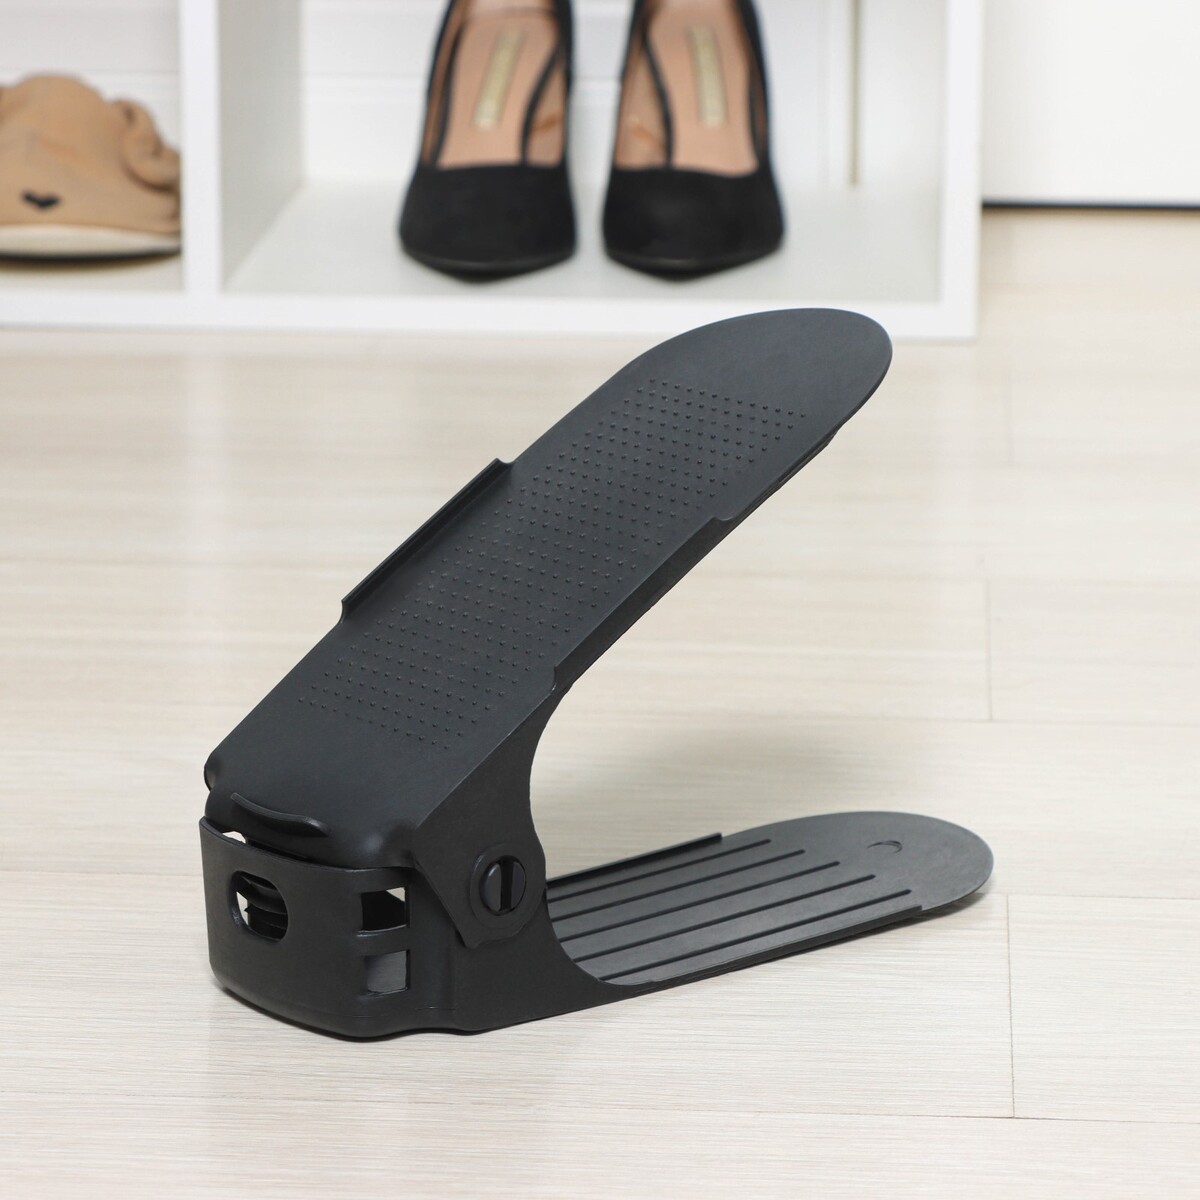 Подставка для хранения обуви регулируемая, 26×10×6 см, цвет черный подставка для обуви 3 х женева 13 600х450х270 мм пдо ж13 ч